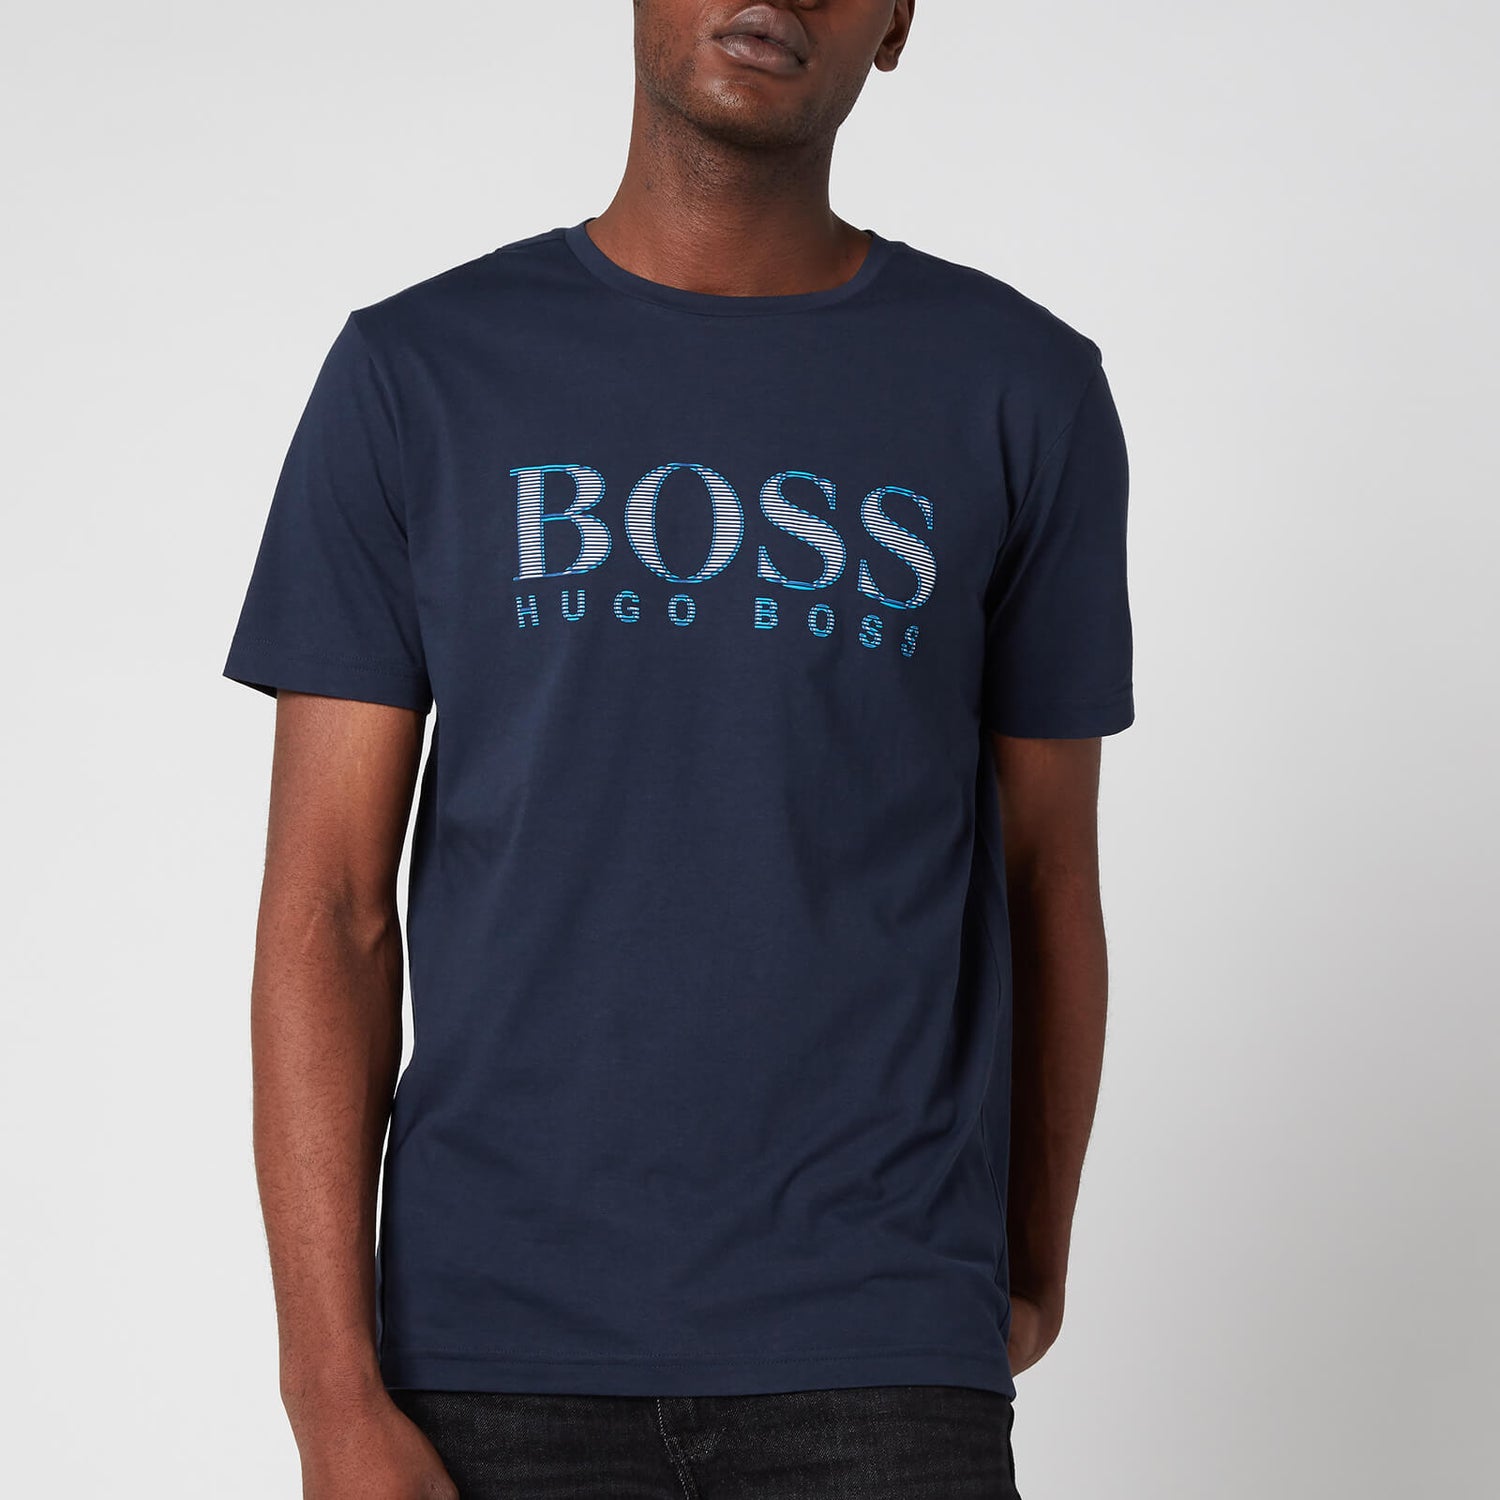 BOSS Athleisure Men's Tee 5 T-Shirt - Navy